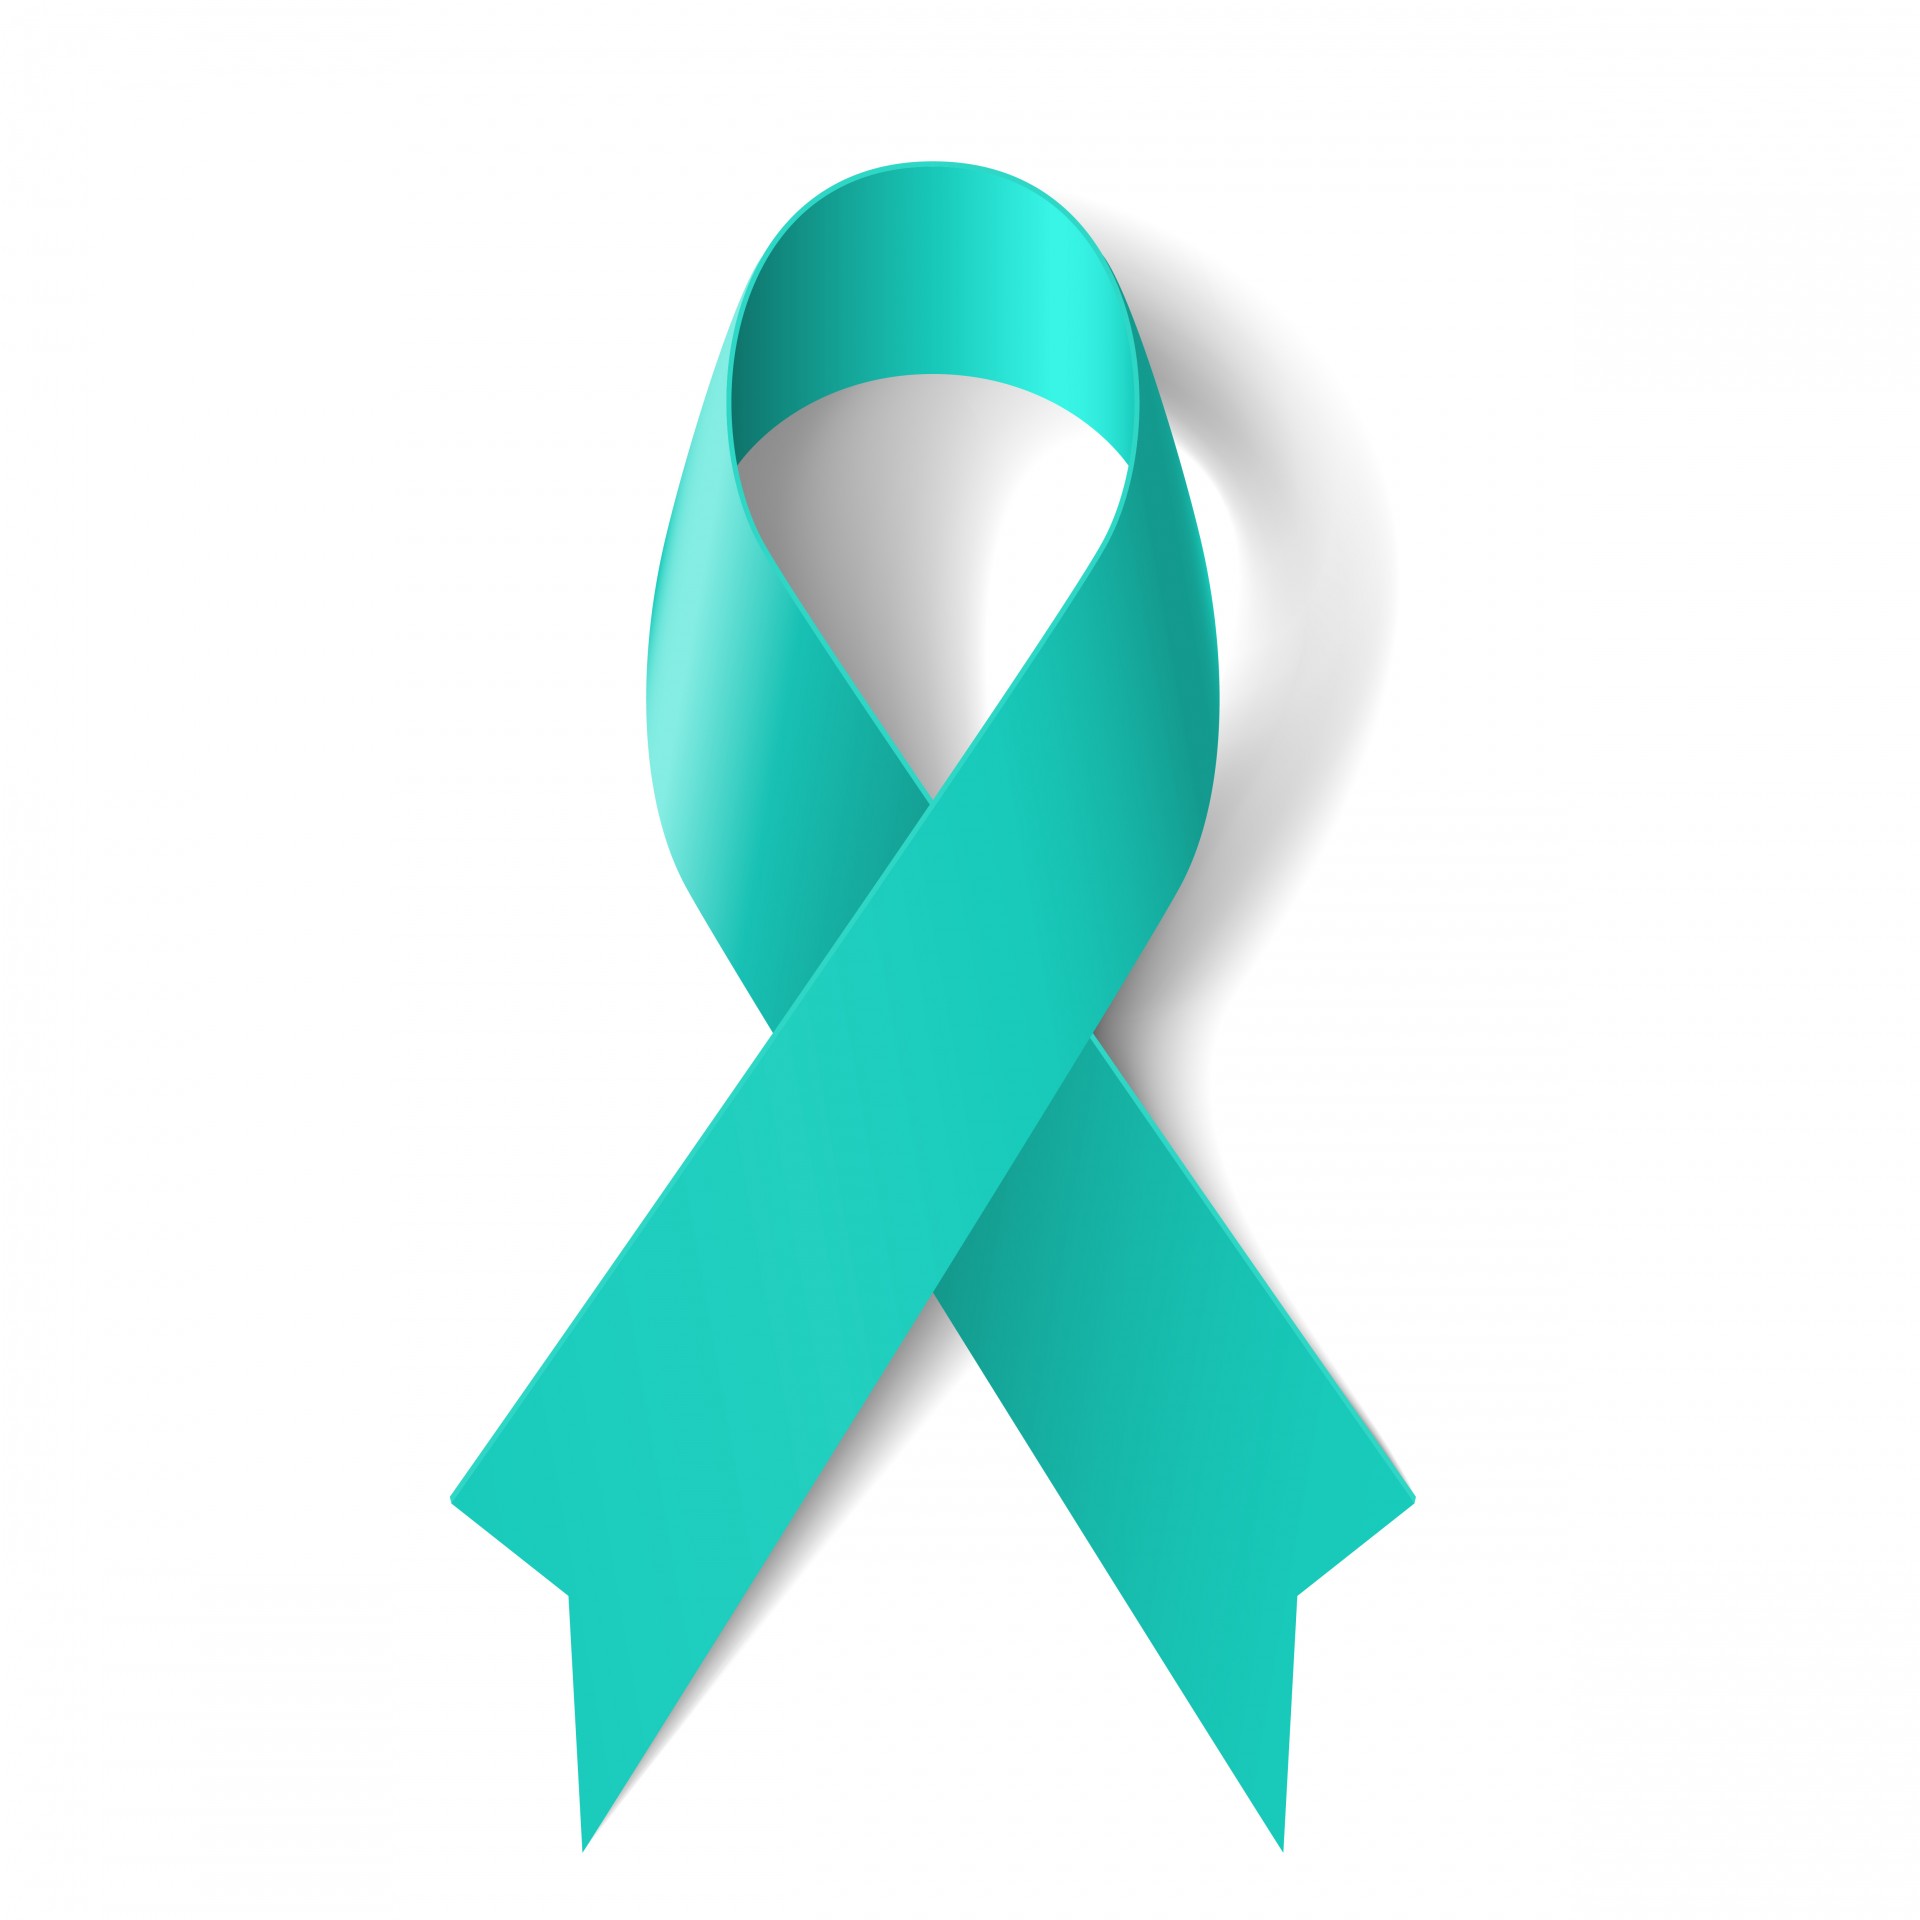 Ovarian Cancer Survivorship